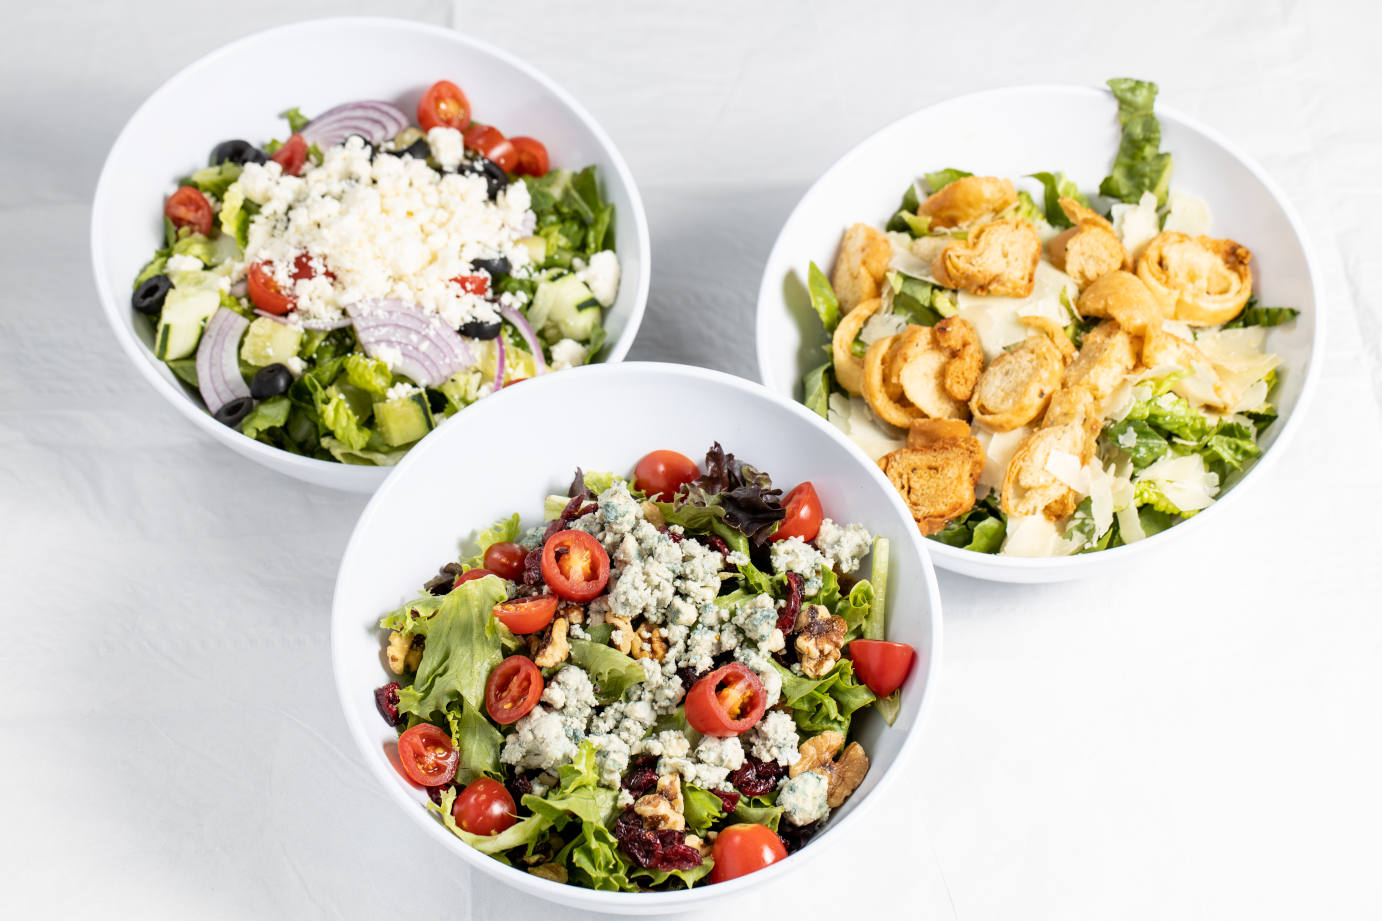 Different salad bowls